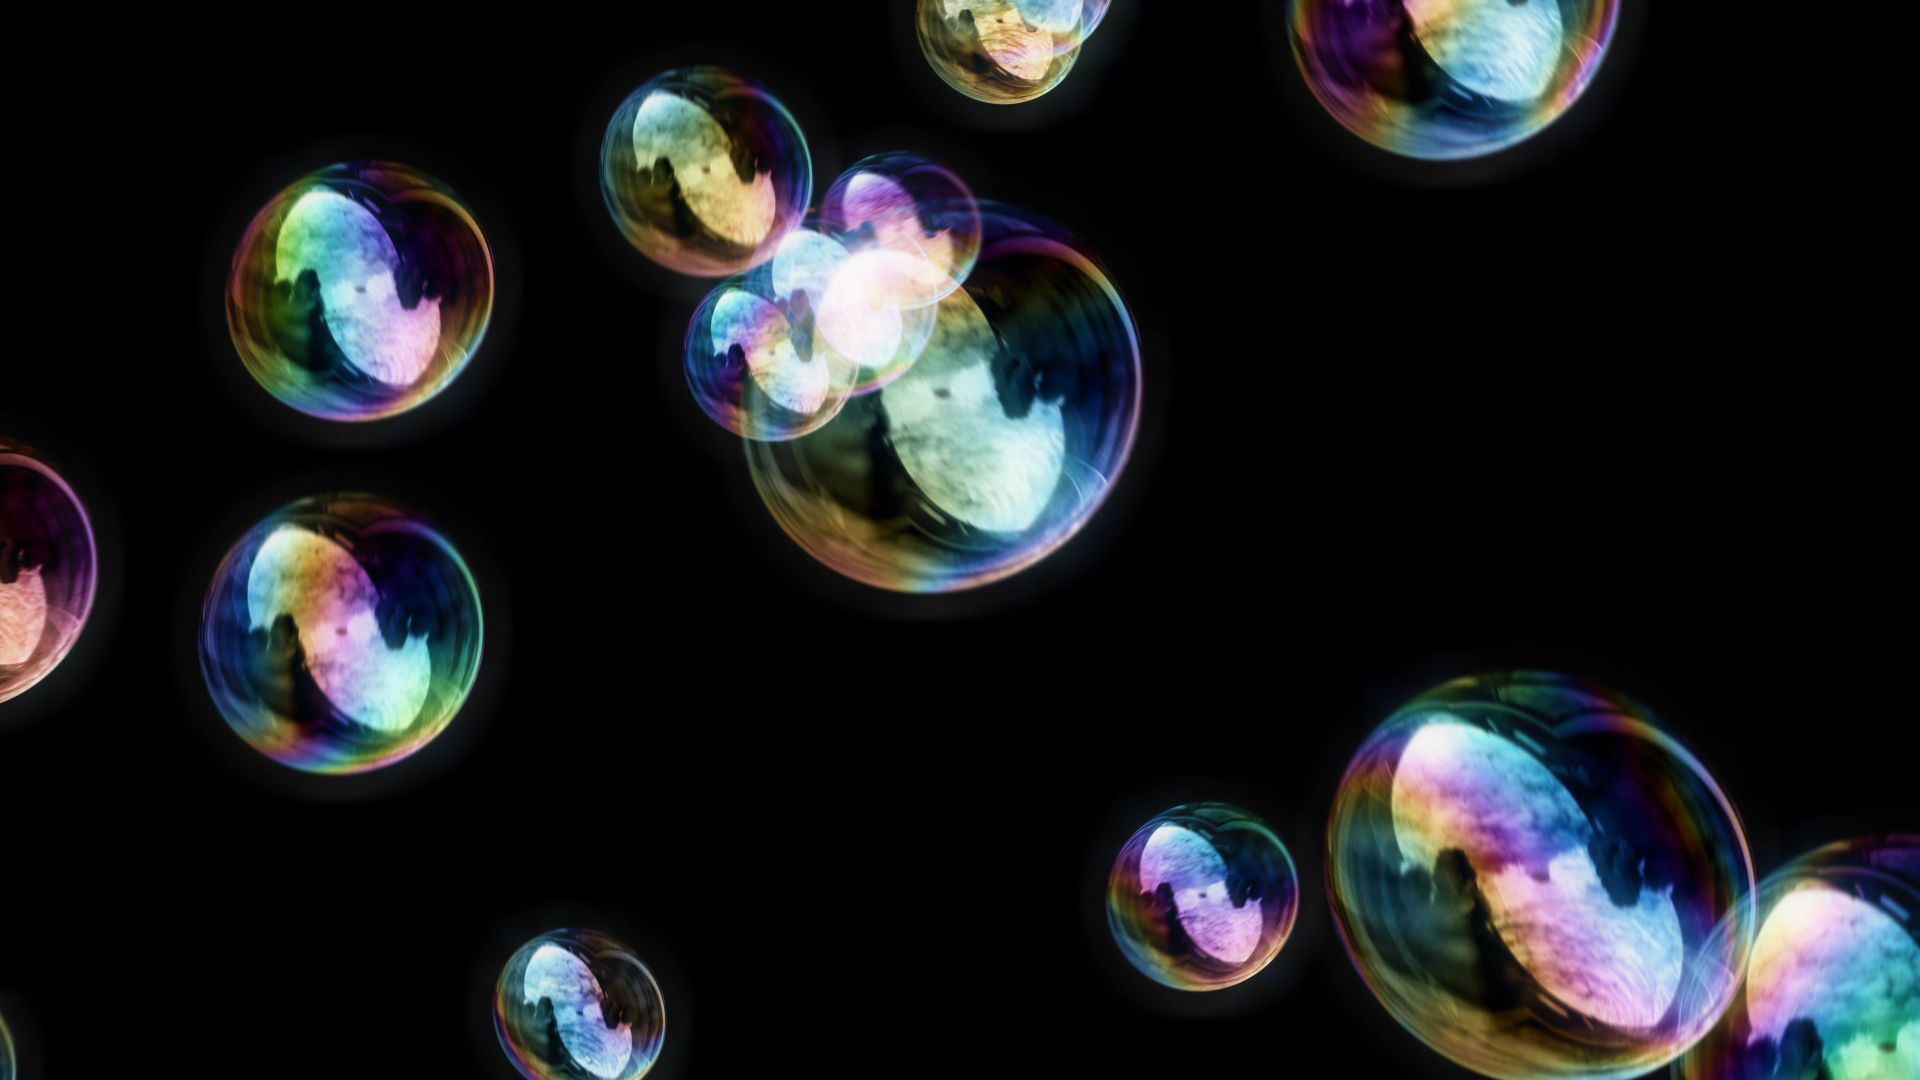 Soap Bubbles - Black Background | downloops - Creative ...